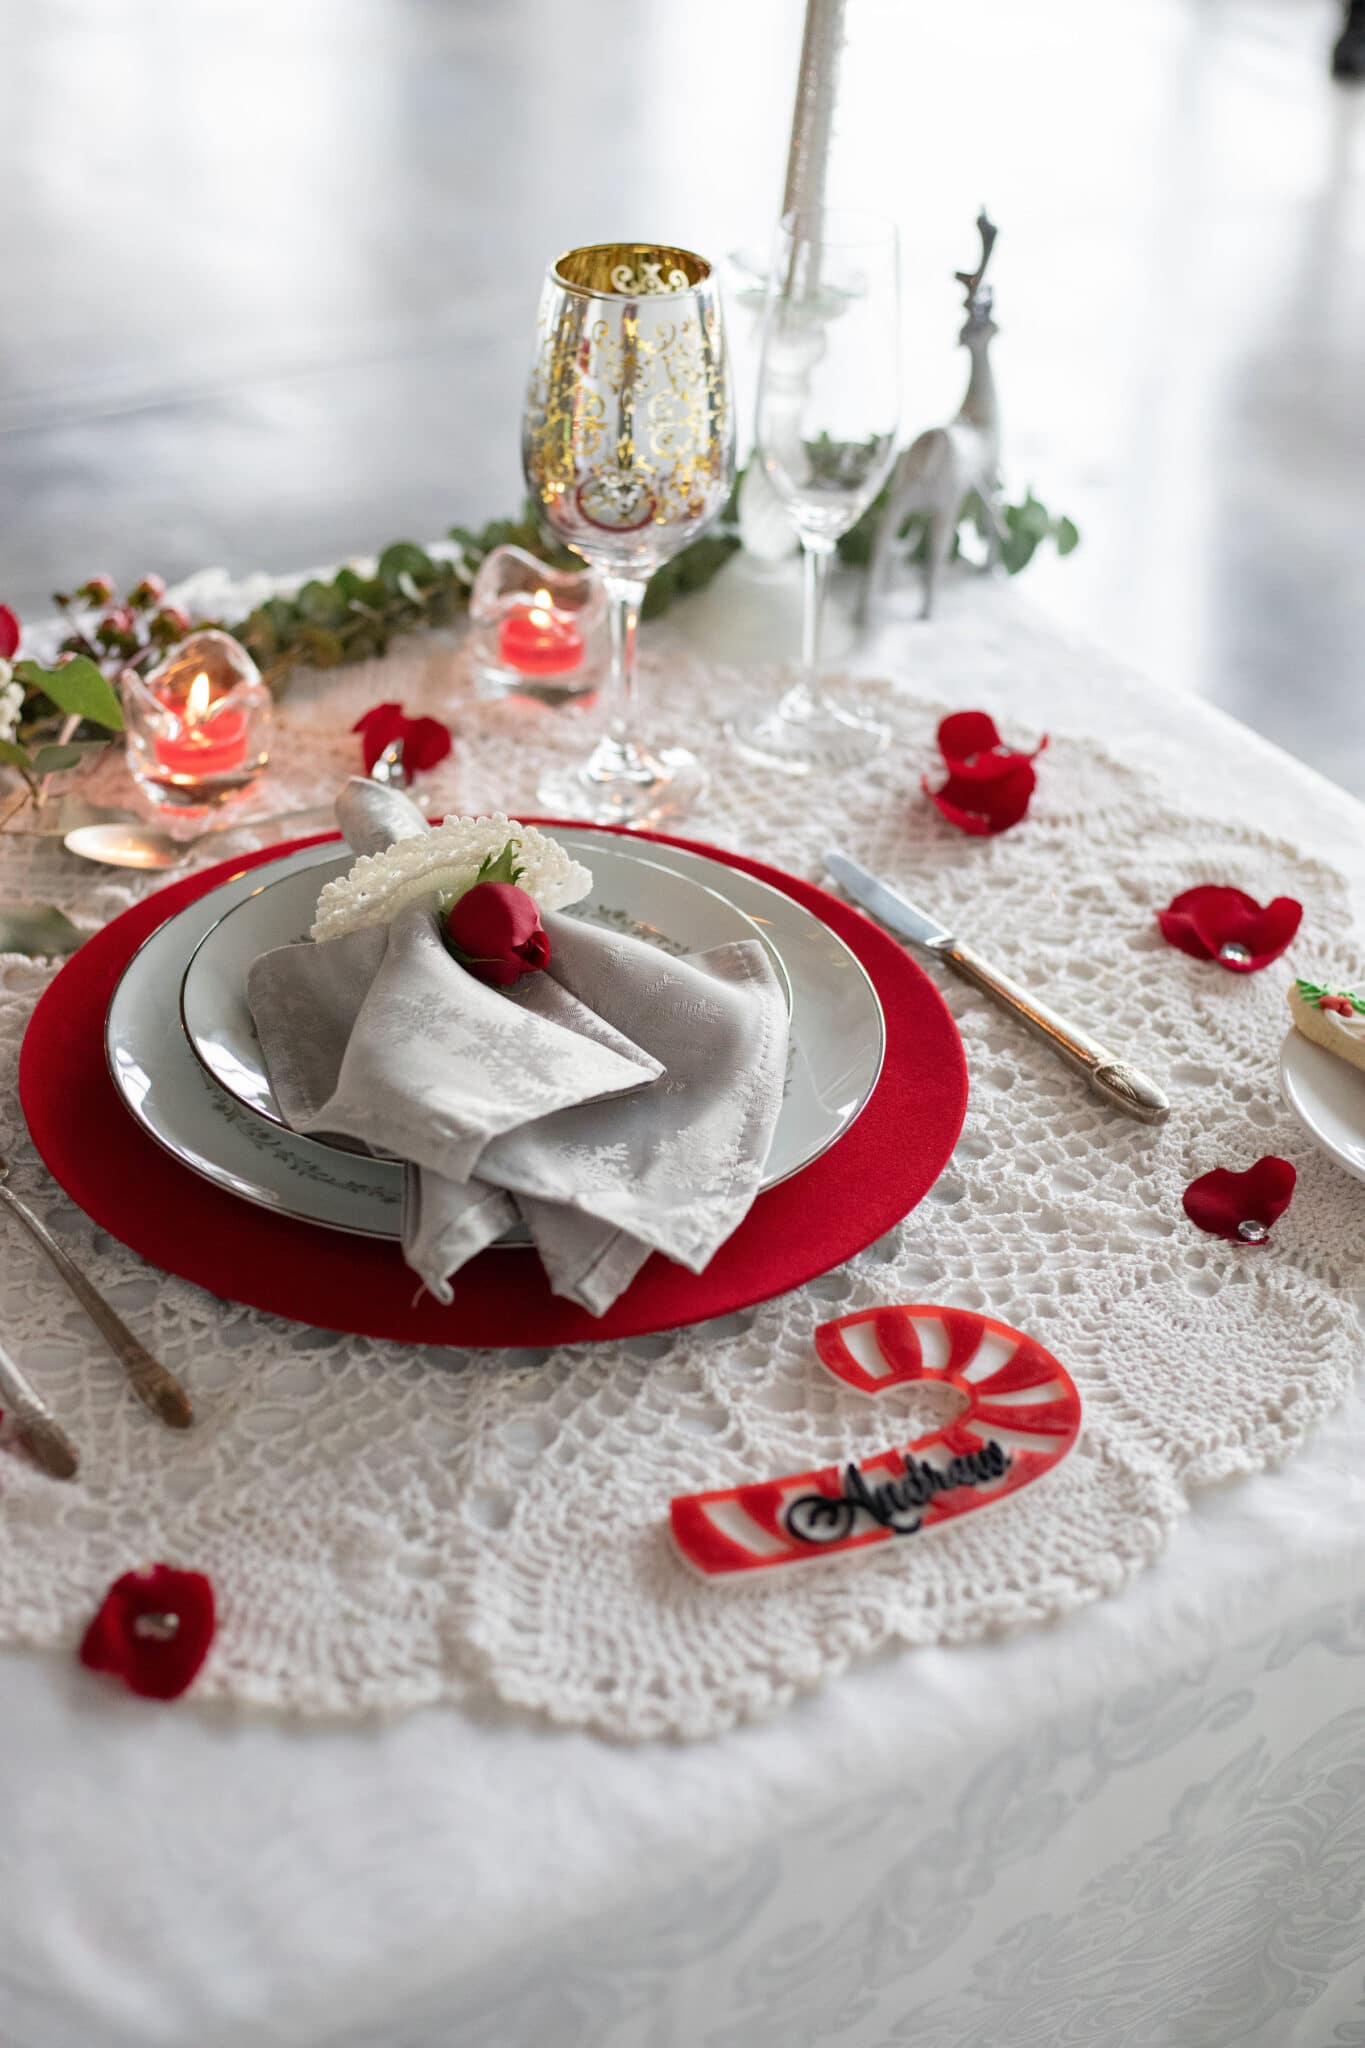 Festive Christmas wedding table setting